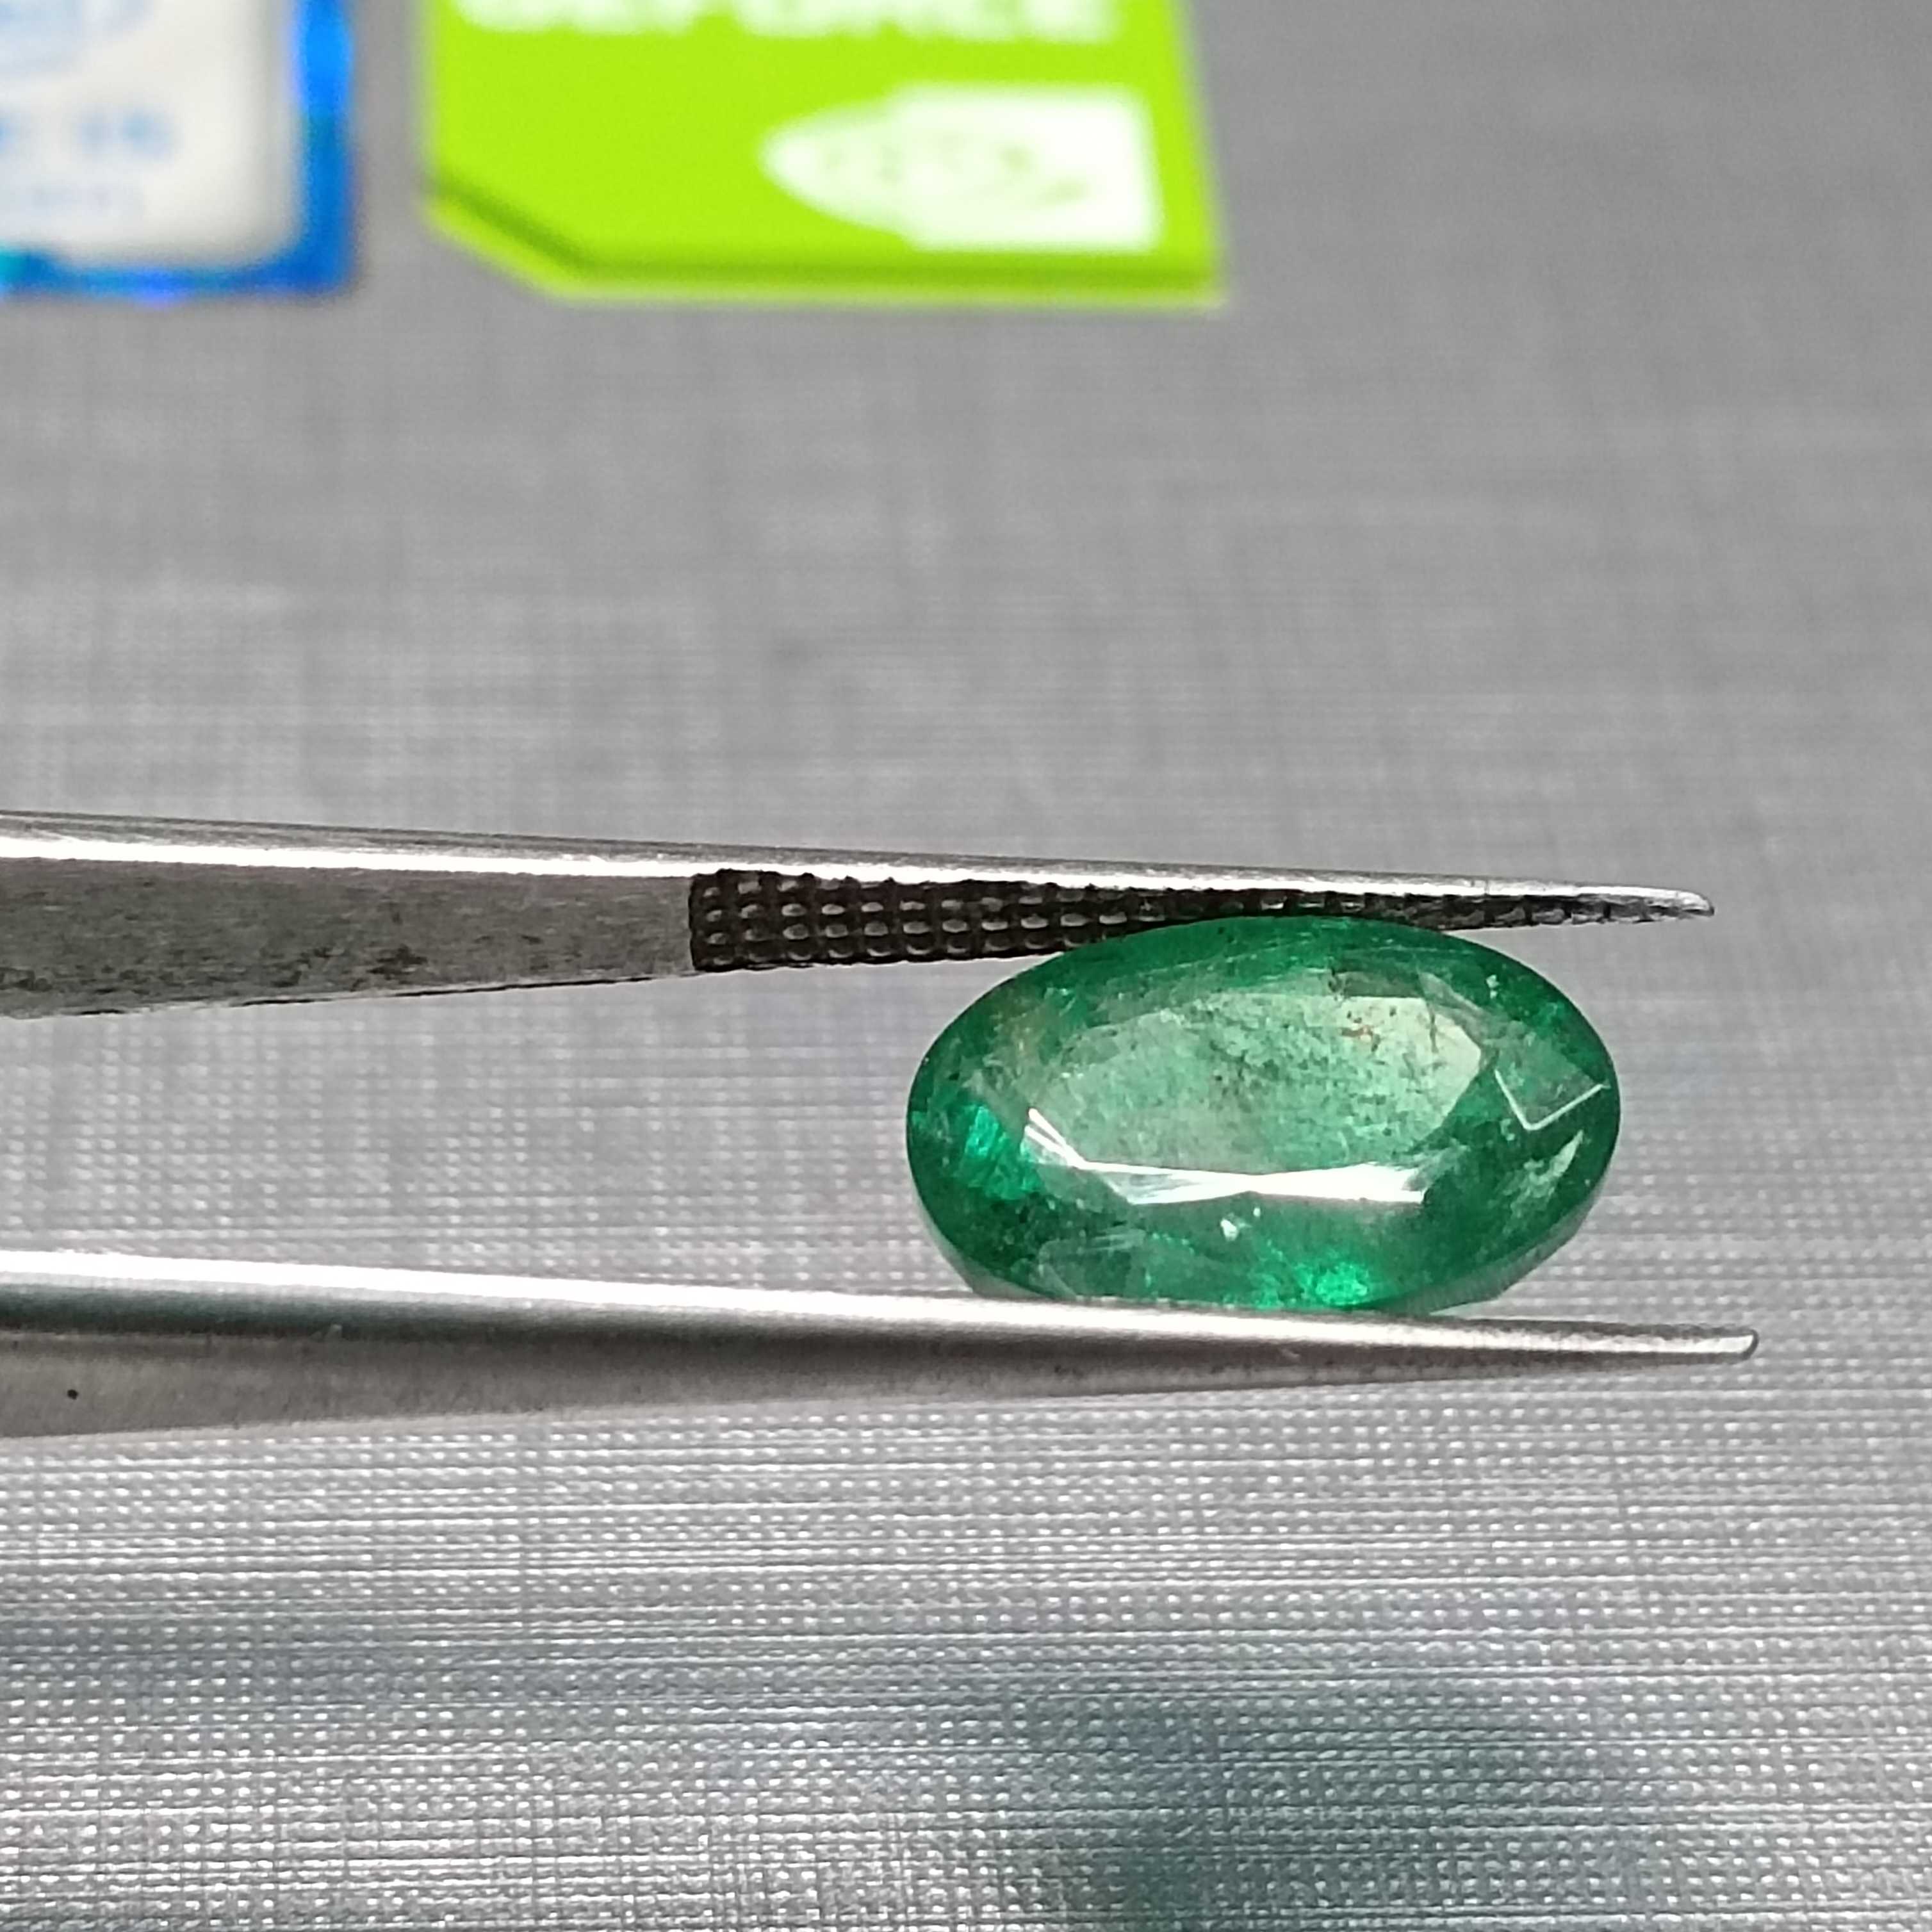 3.25ct Oval Cut Medium Green Shade Emerald